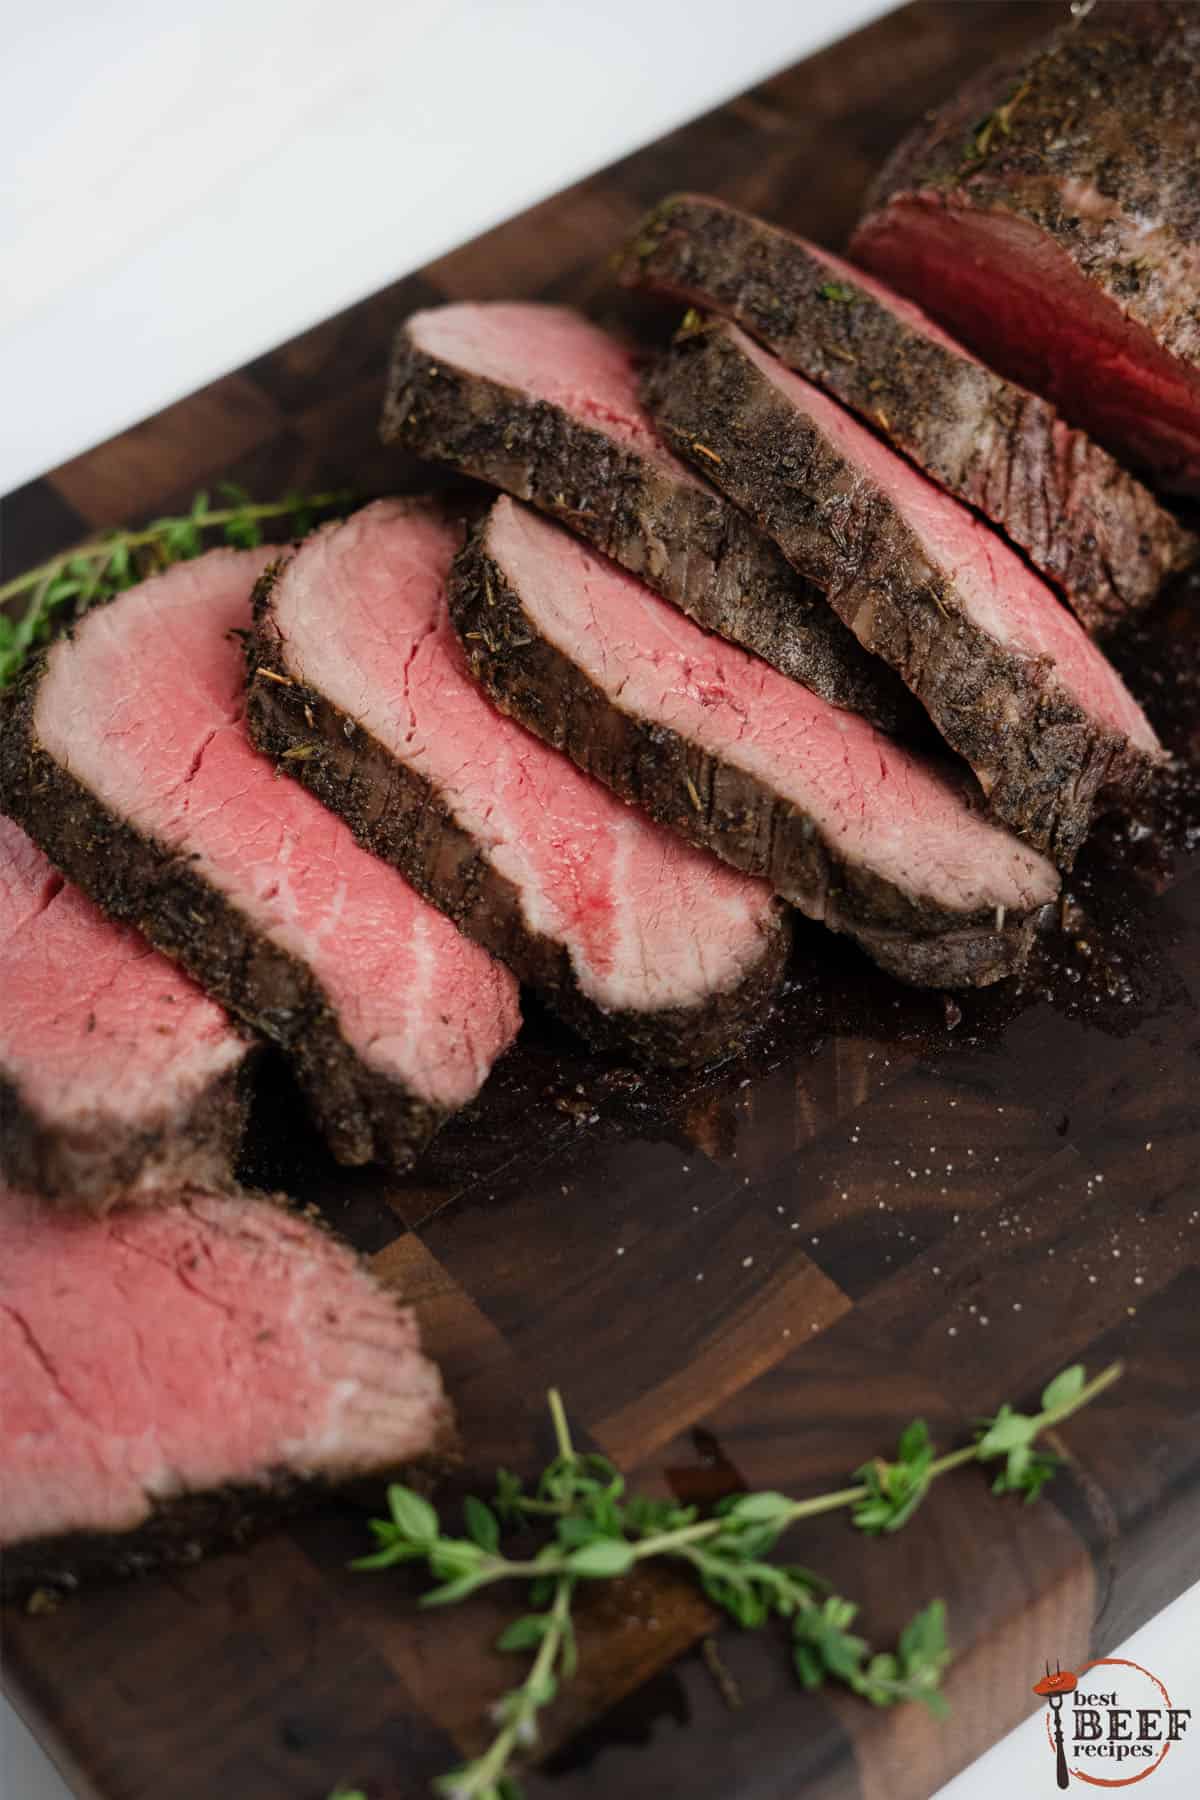 sliced beef tenderloin on a wood cutting board